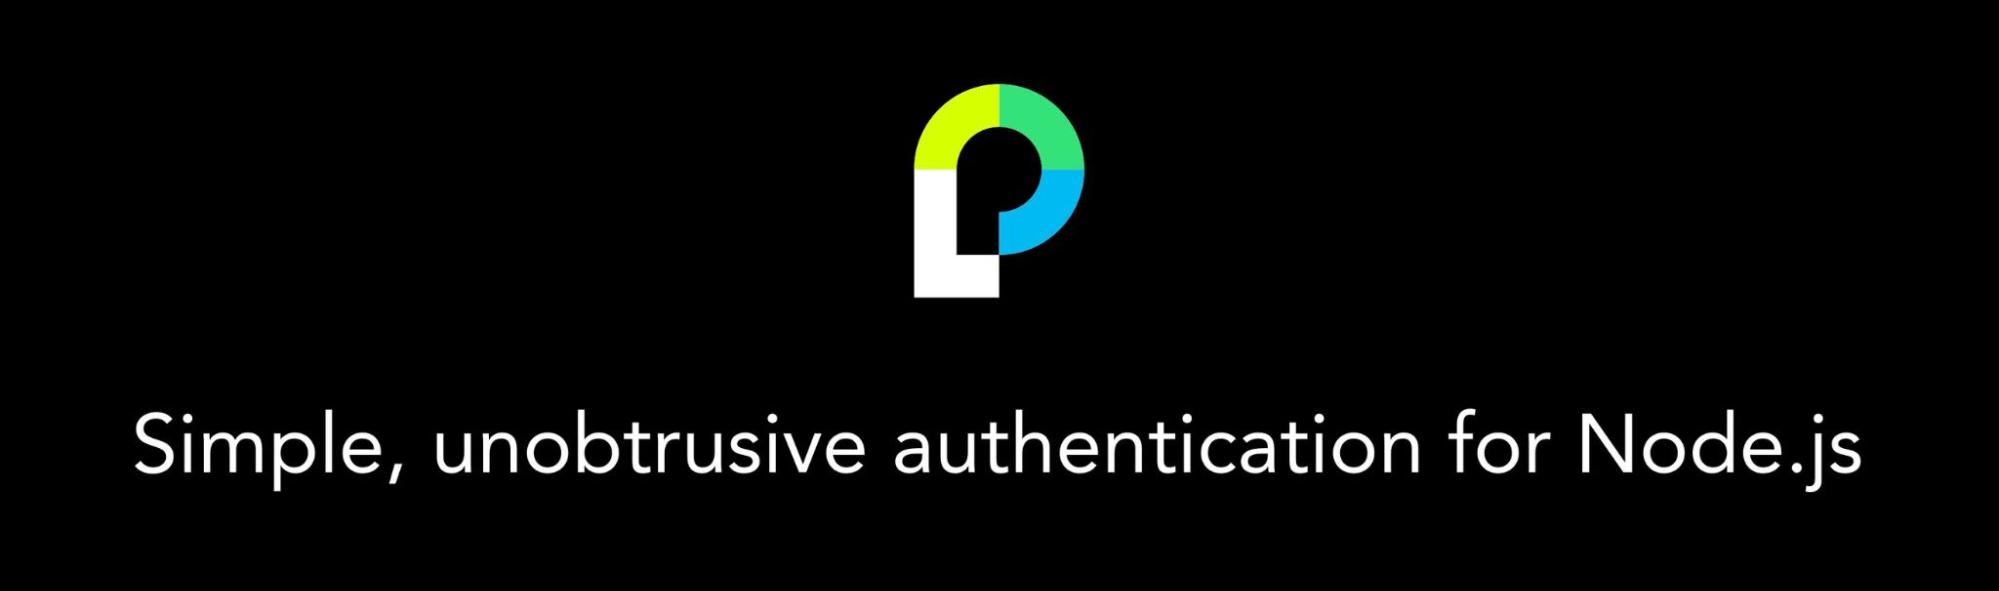 Passport.js logo and slogan that reads: Simple, unobtrusive authentication for Node.js